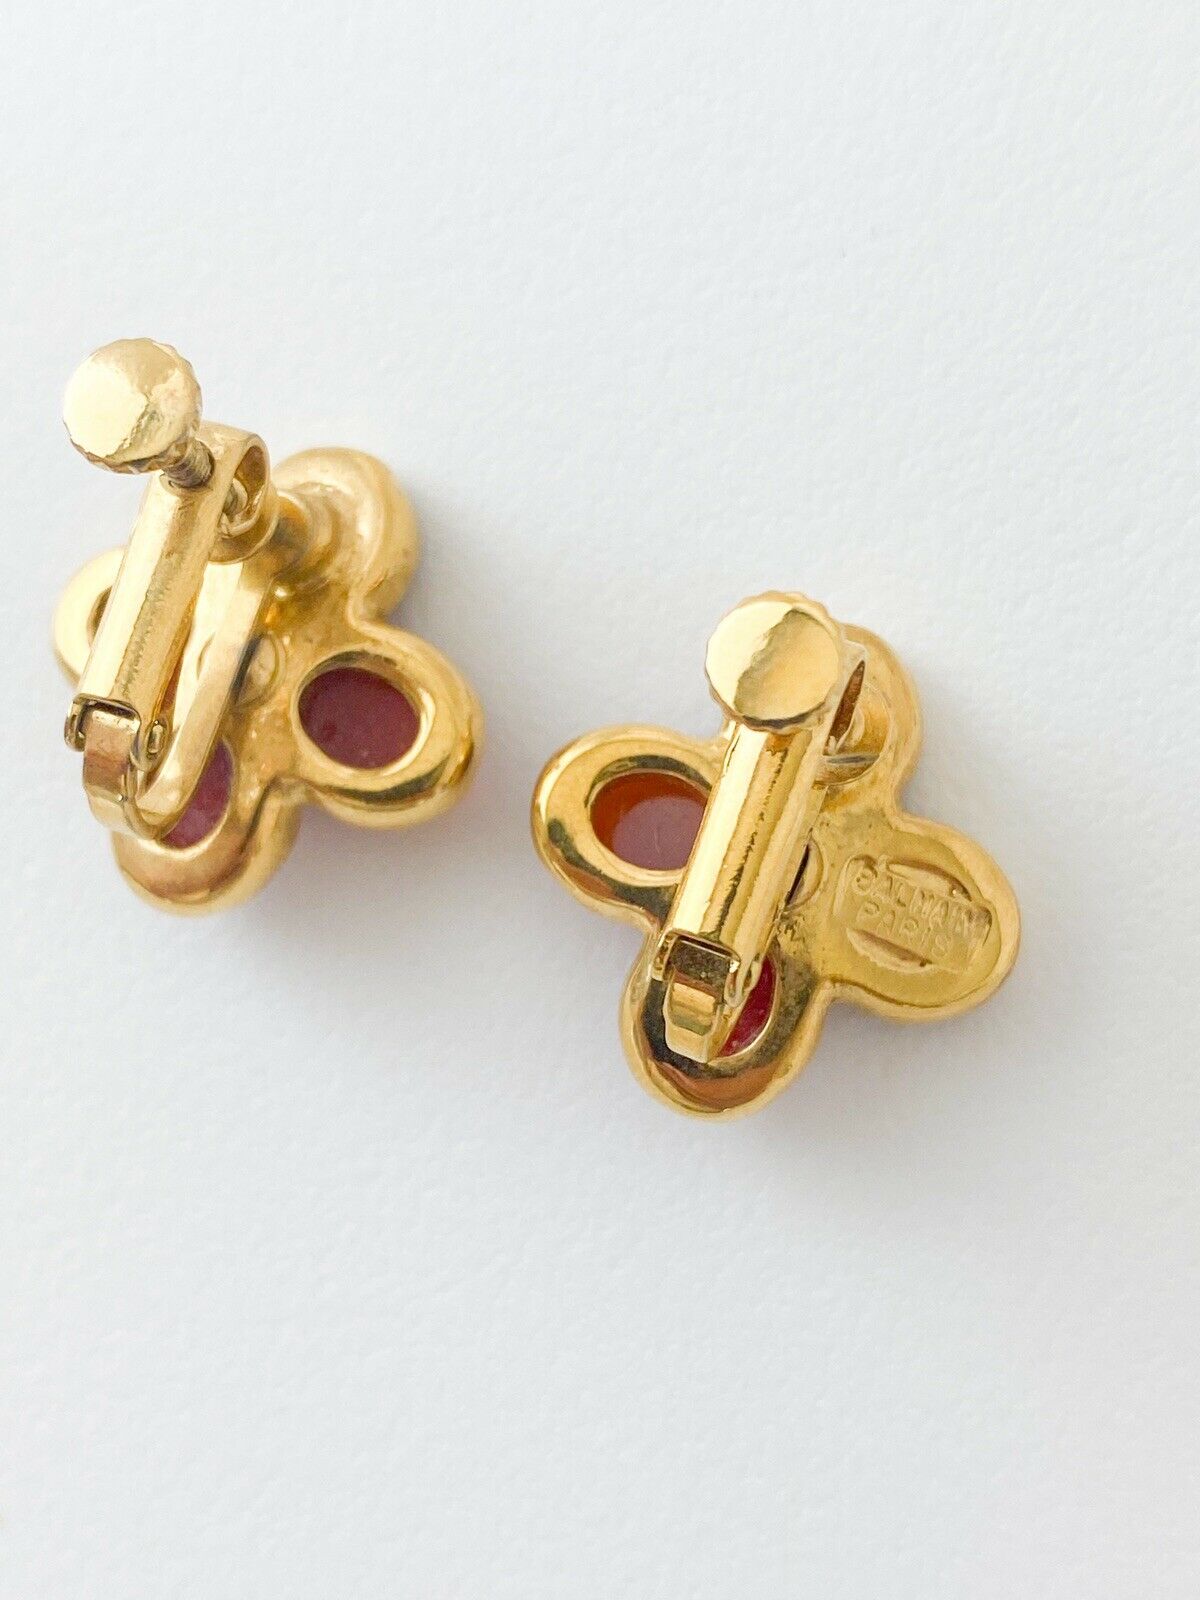 PIERRE BALMAIN PARIS Vintage Gold Tone Flower Earrings Glass Cabochon Brown